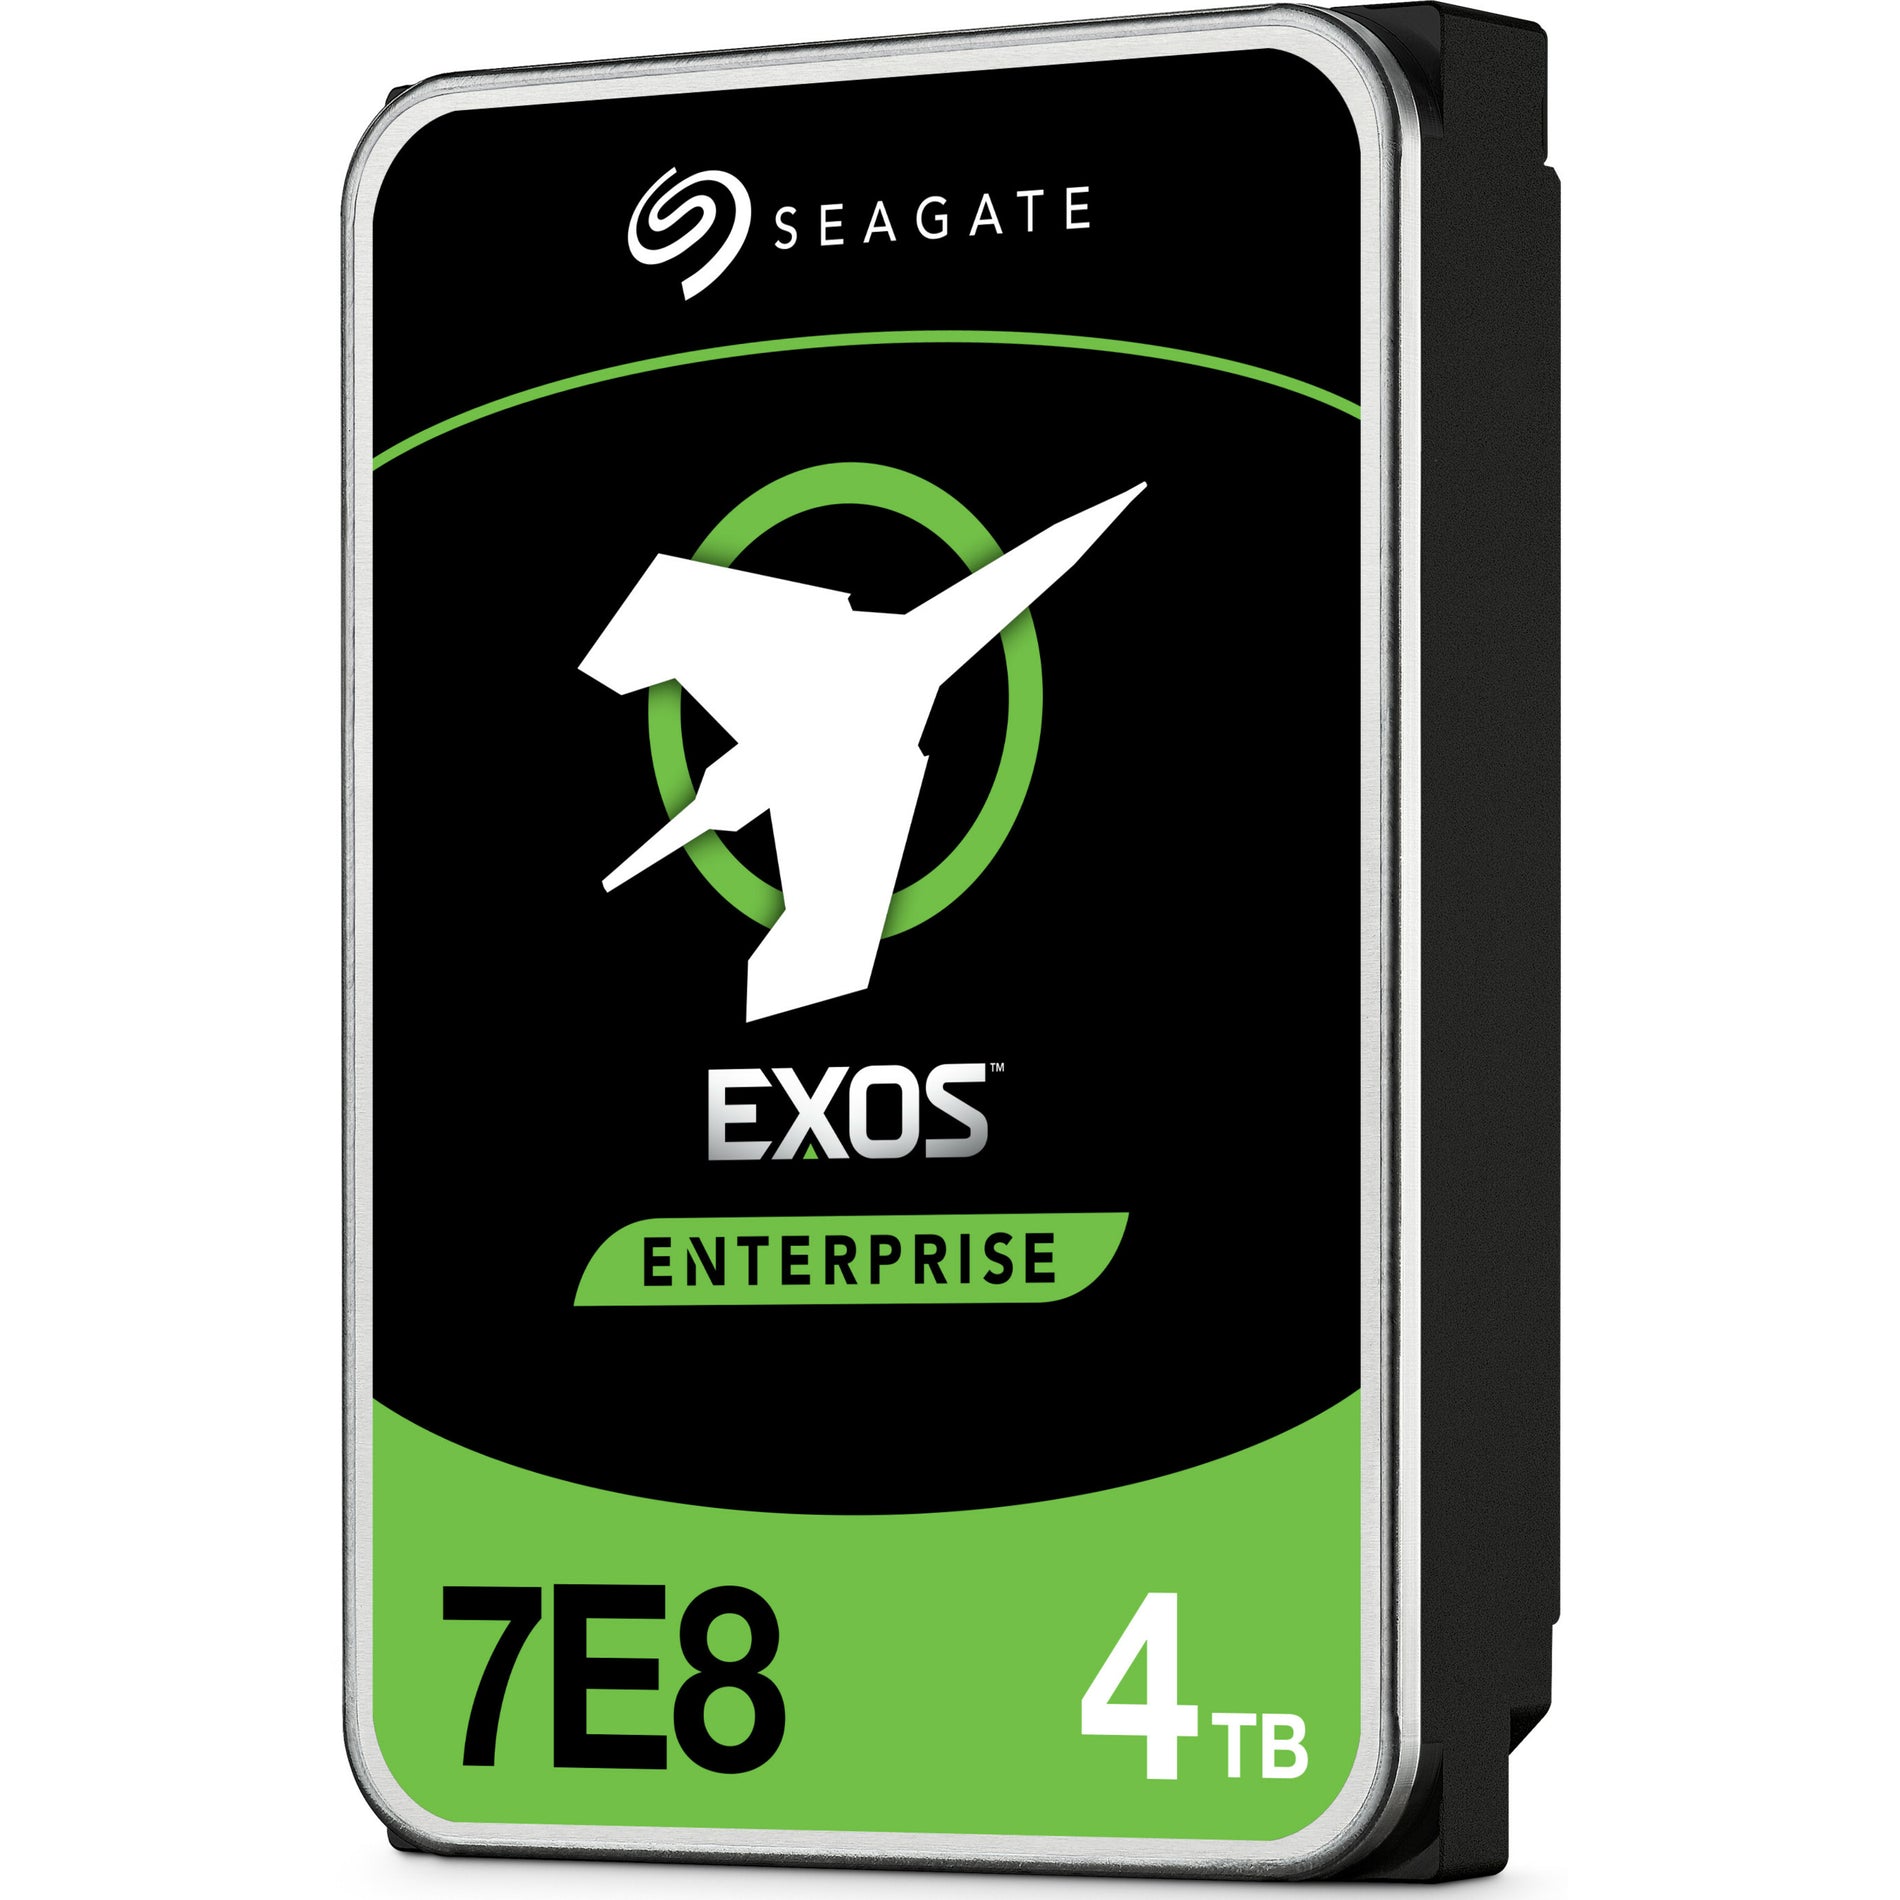 Seagate ST8000NM004A Exos 7E8 Hard Drive, 8TB Storage Capacity, 7200 RPM, 256MB Buffer